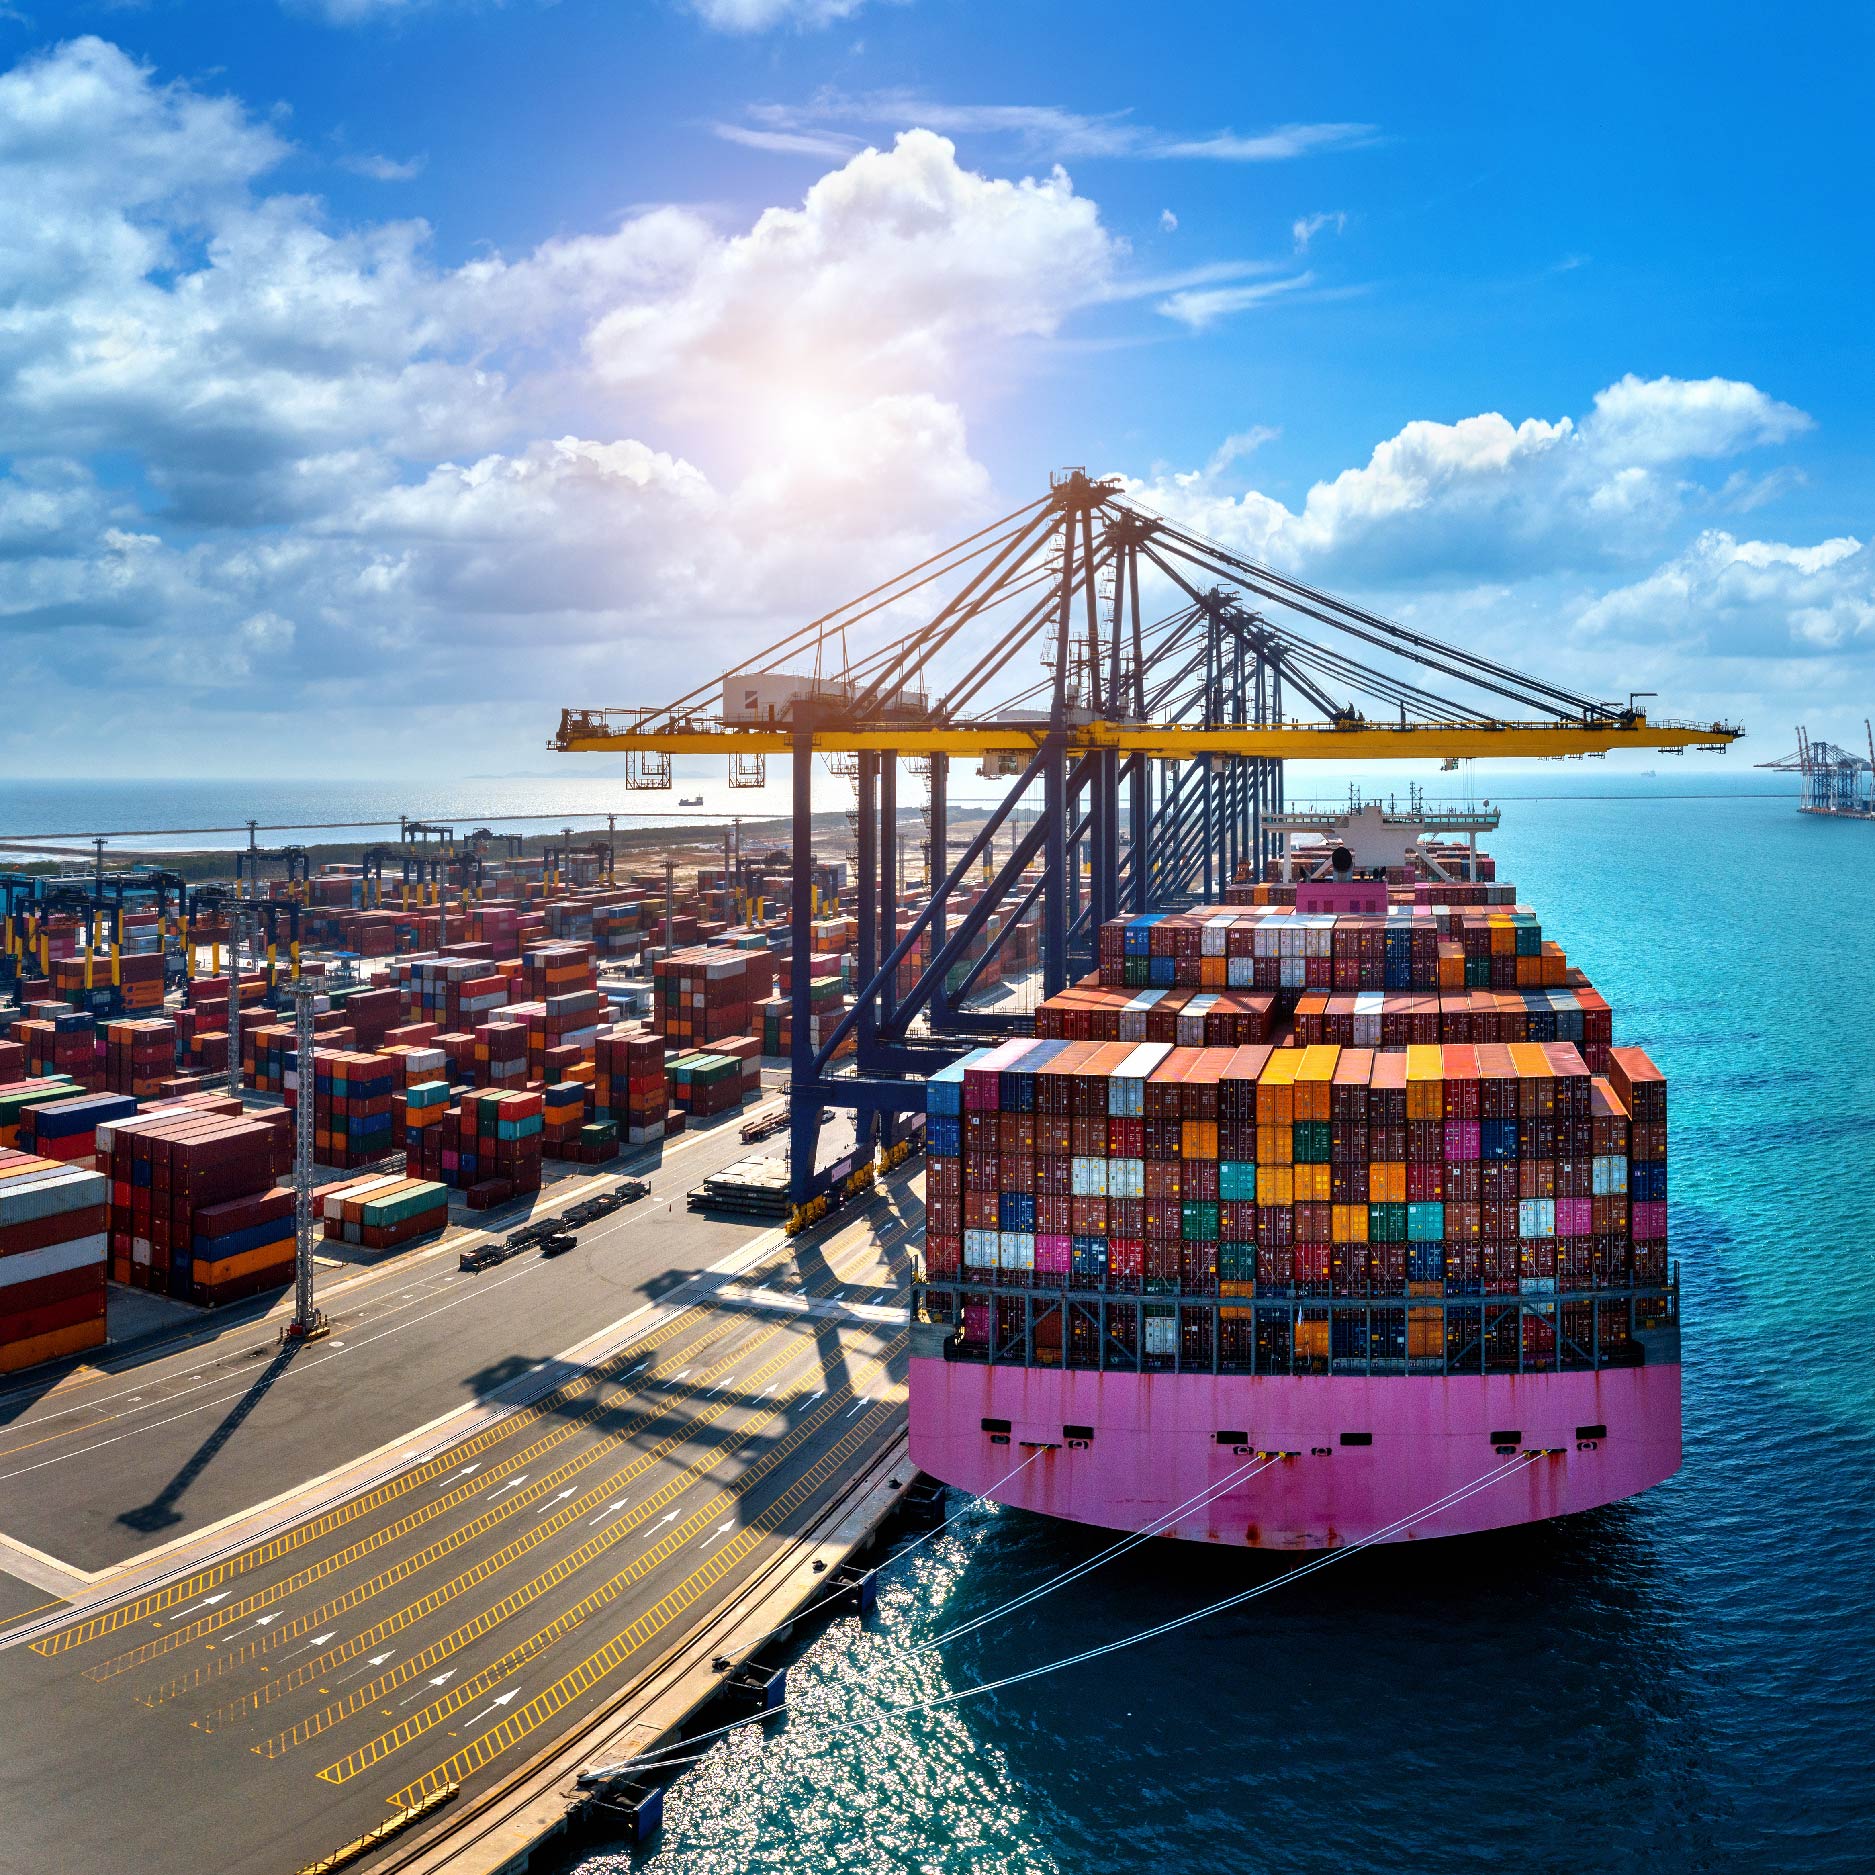 sea freight-aerial-view-cargo-ship-cargo-container-harbor